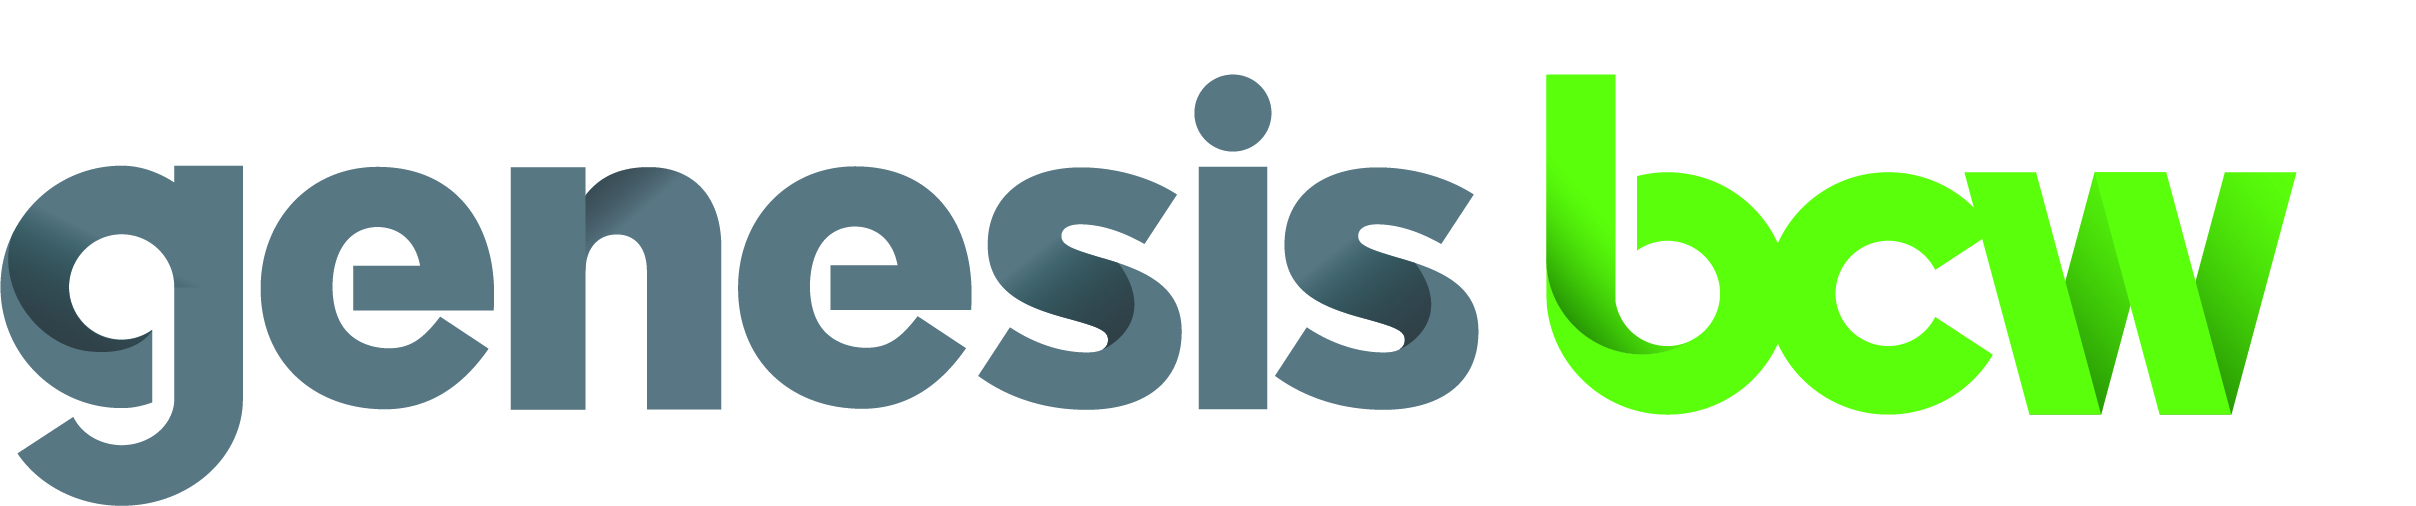 Genesis Burson-Marsteller rebrands as Genesis BCW | PRmoment.in